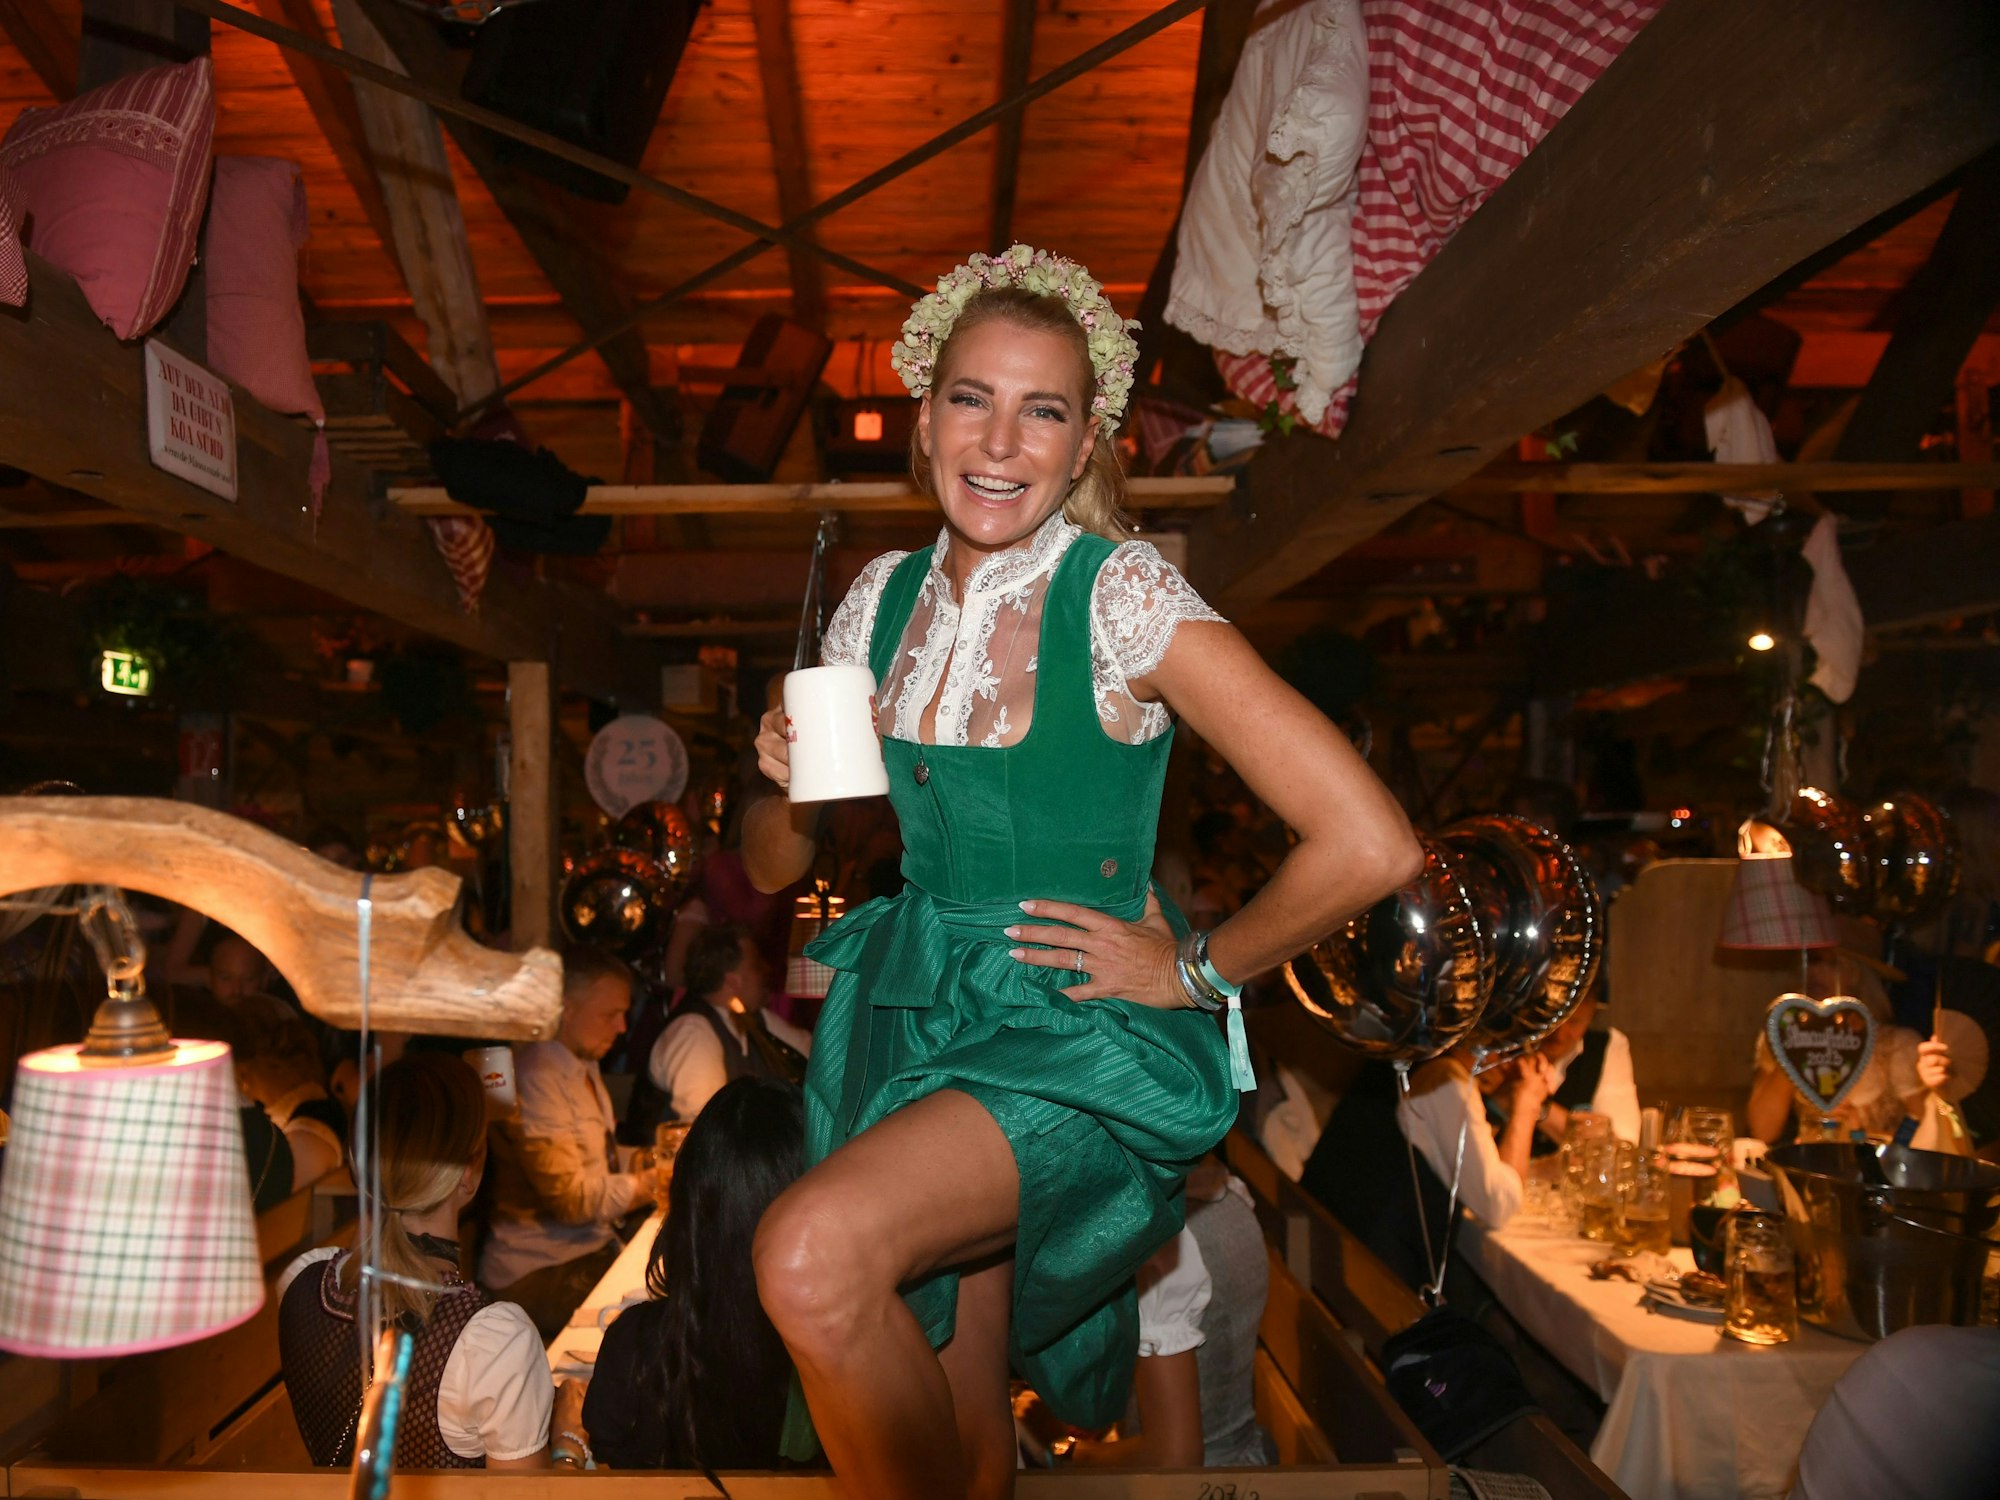 DJane Giulia Siegel feiert beim 25 jährigen Jubiläum des "Almauftrieb" im Käfer-Zelt.